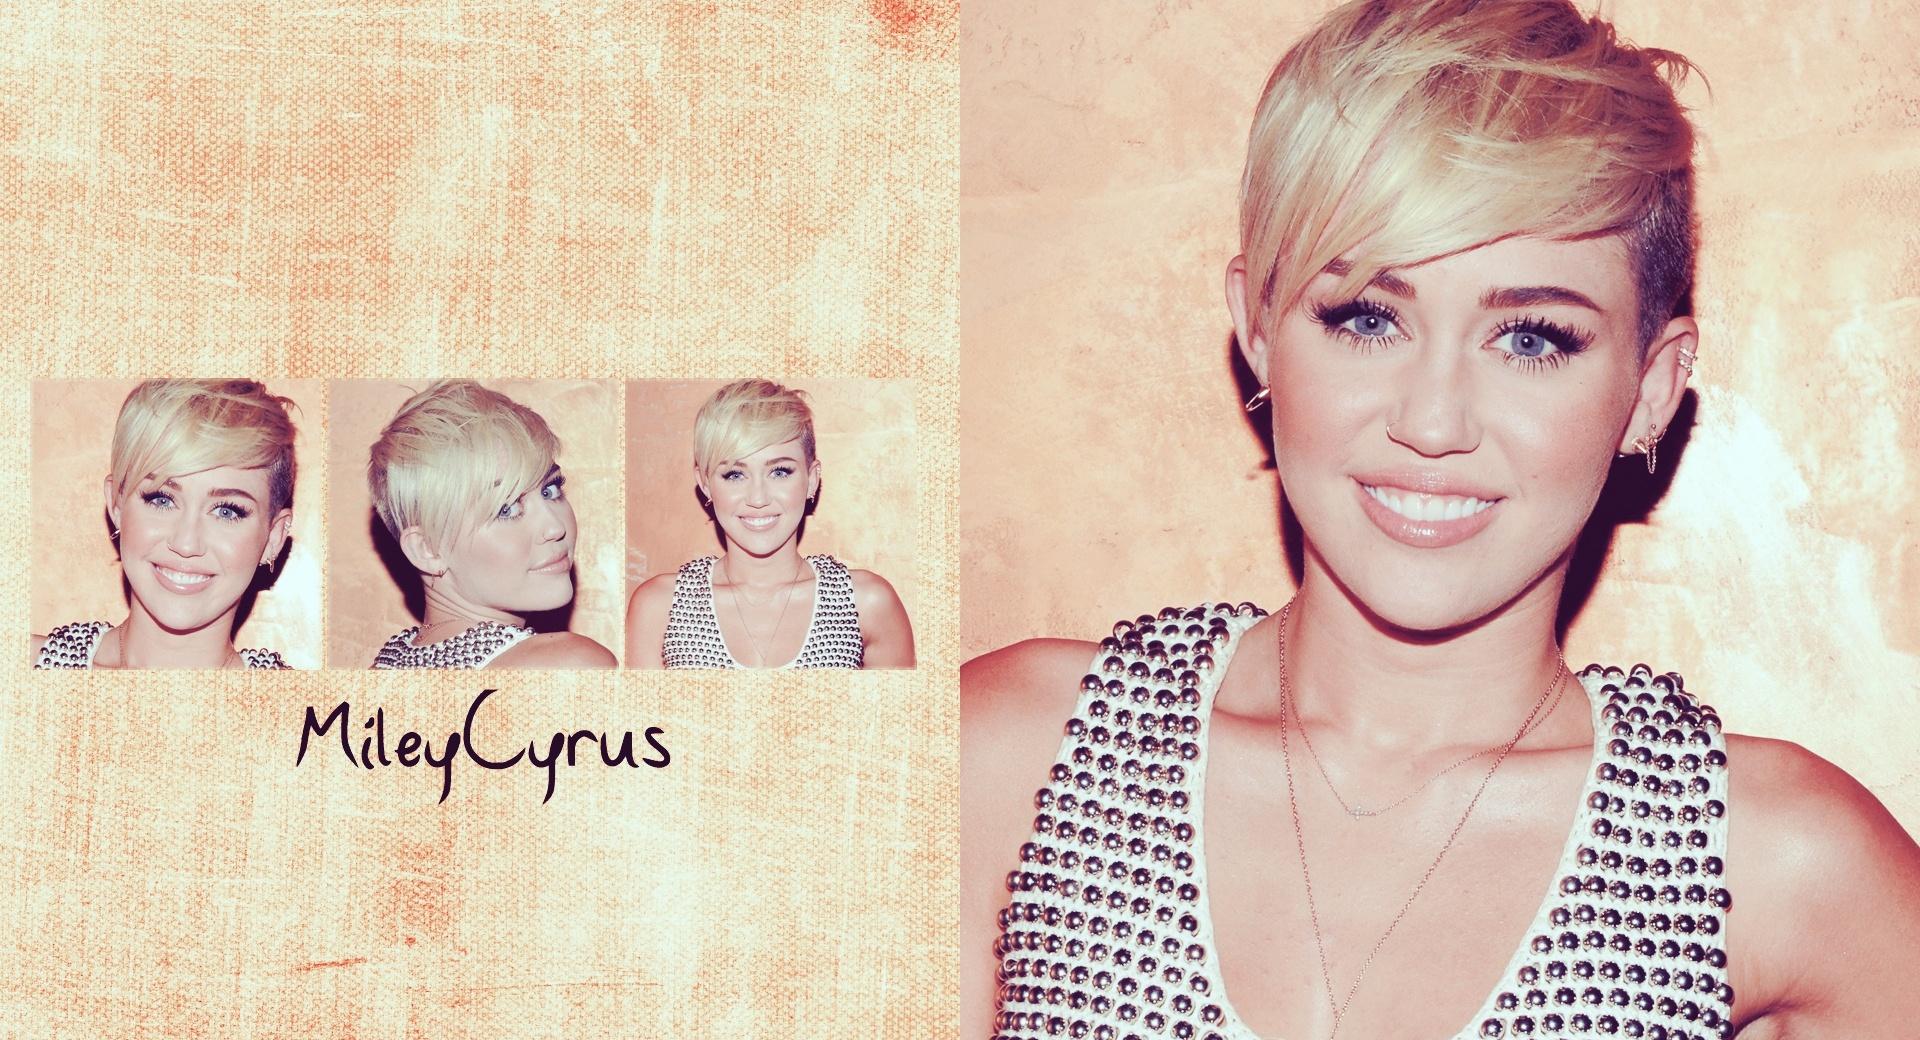 Miley Cyrus New Haircut at 2048 x 2048 iPad size wallpapers HD quality